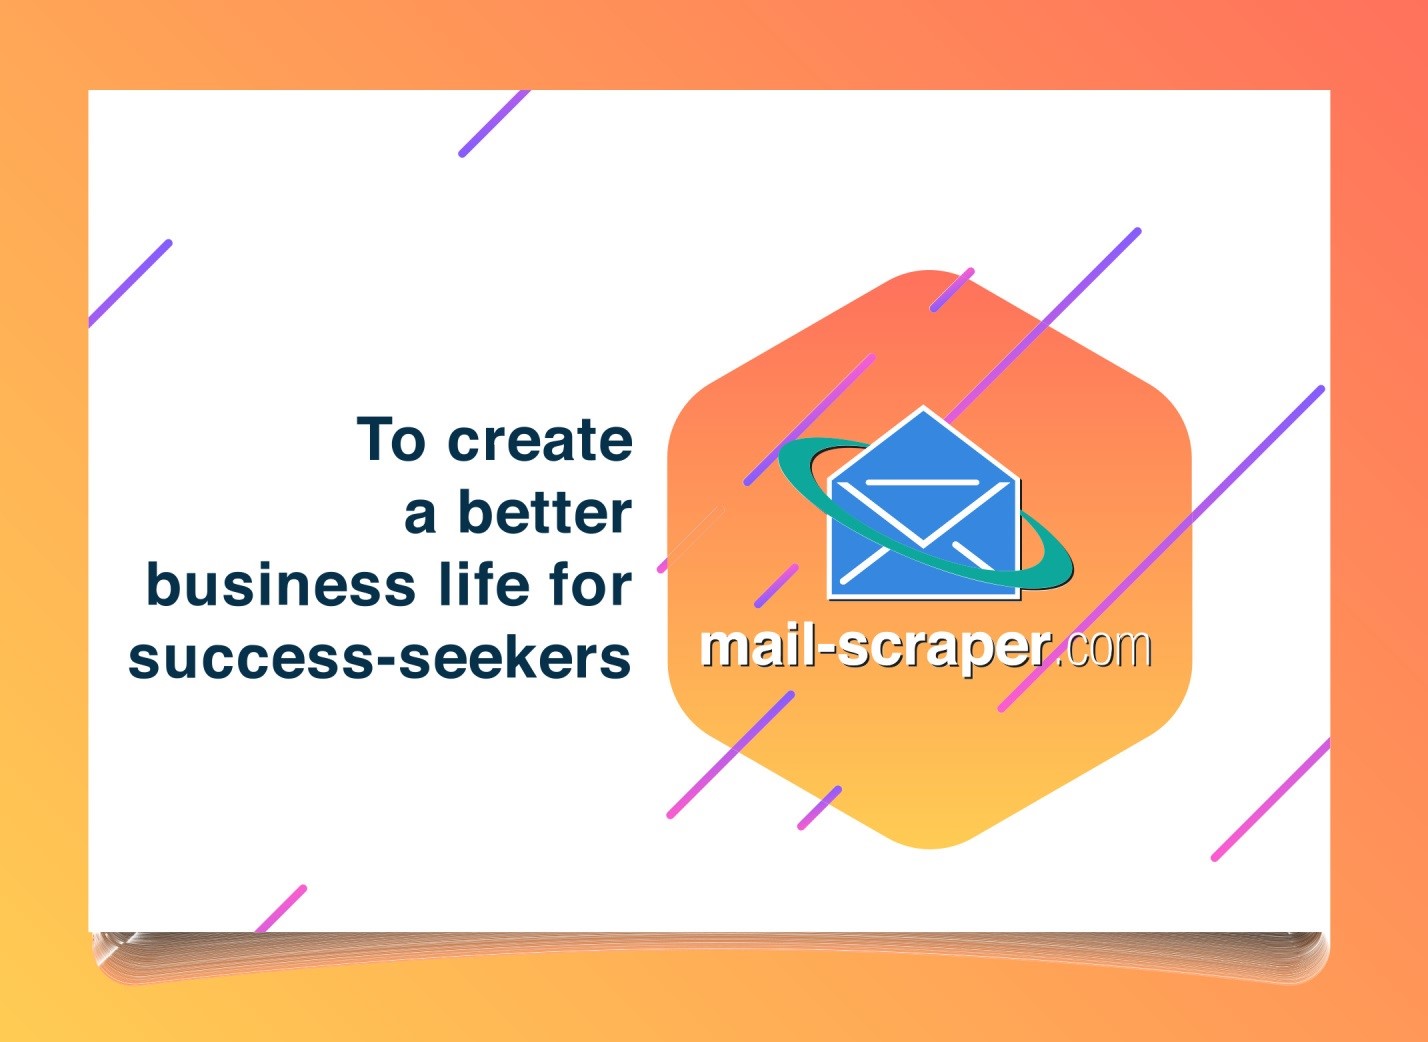 validator email, email validator, email verification service, email checker, bulk email checker, checker email, bulk checker email